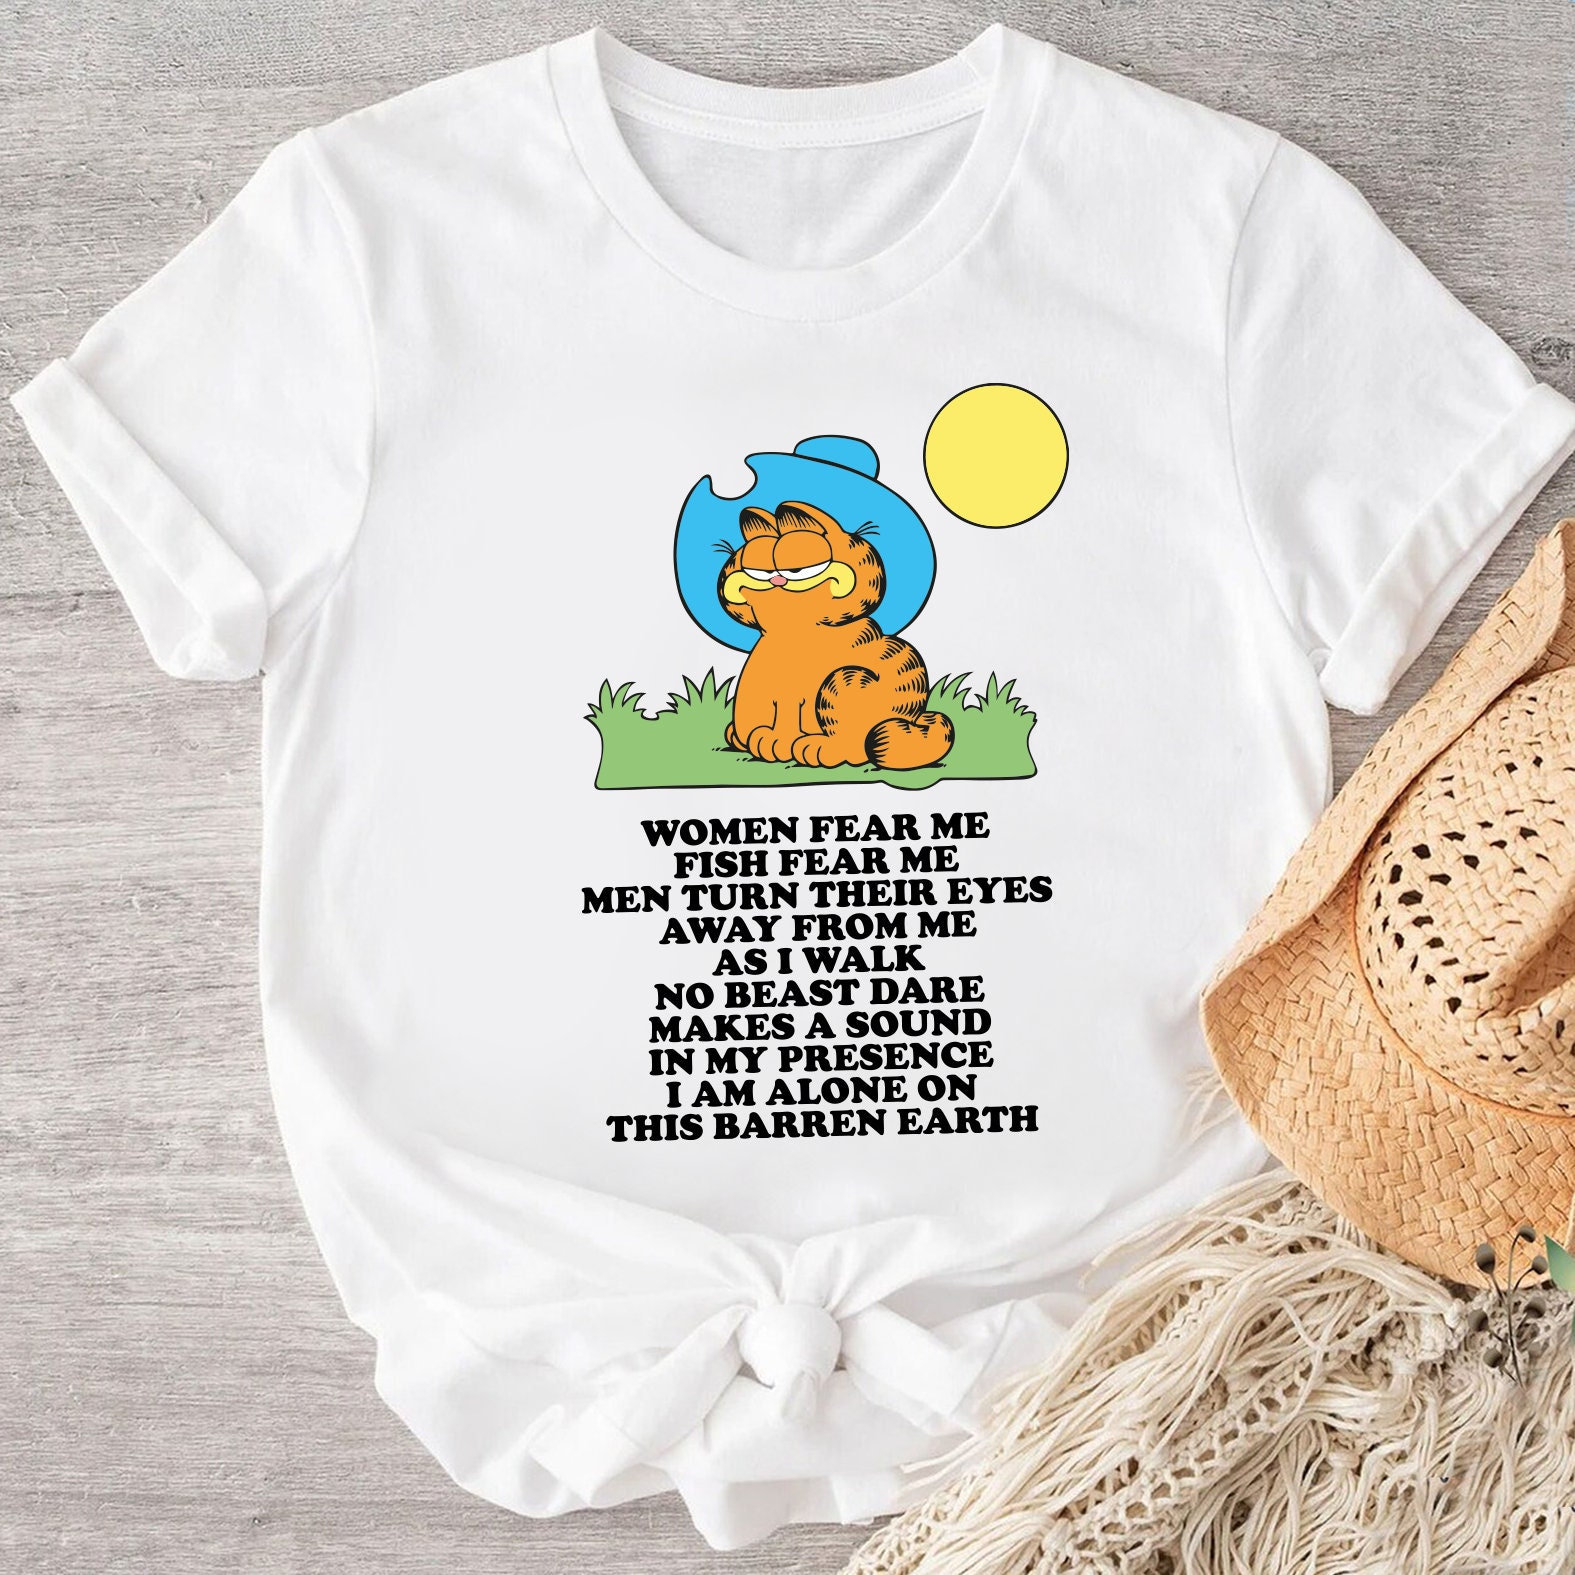 Garfield Meme Shirt - Etsy